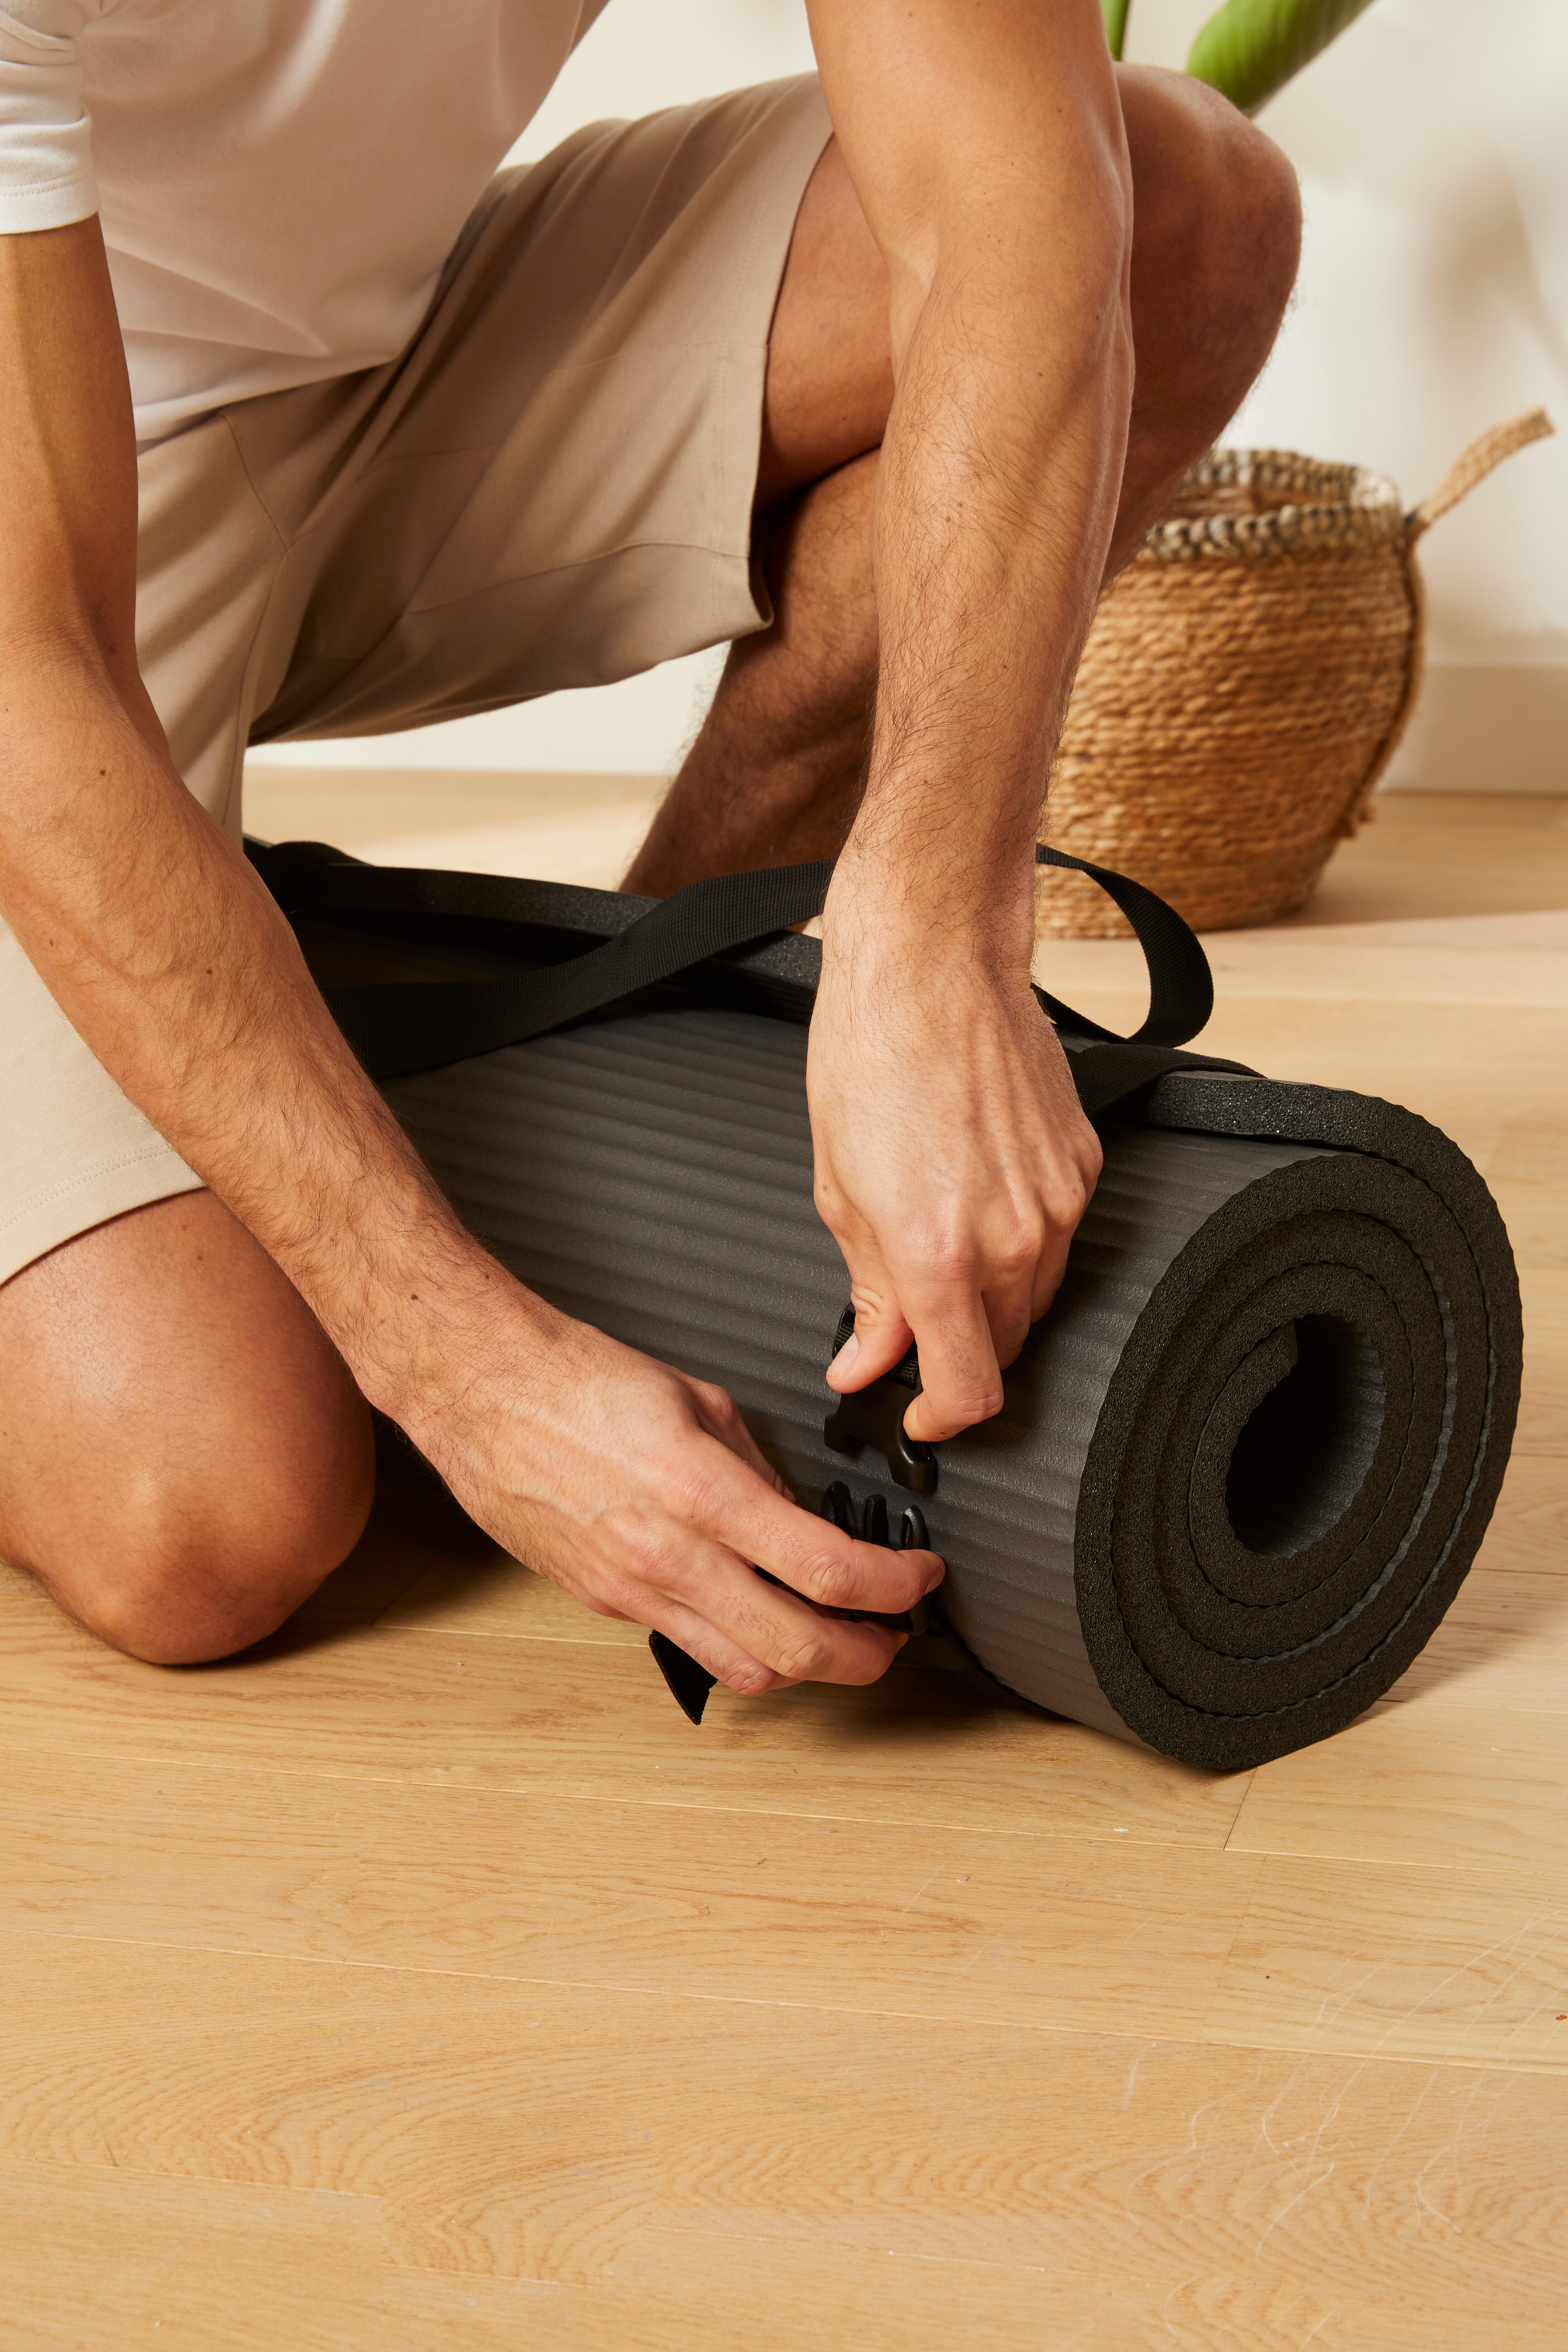 YogaEase Sleek Mat Carrier: Spacious Yoga Mat Holder, Secure